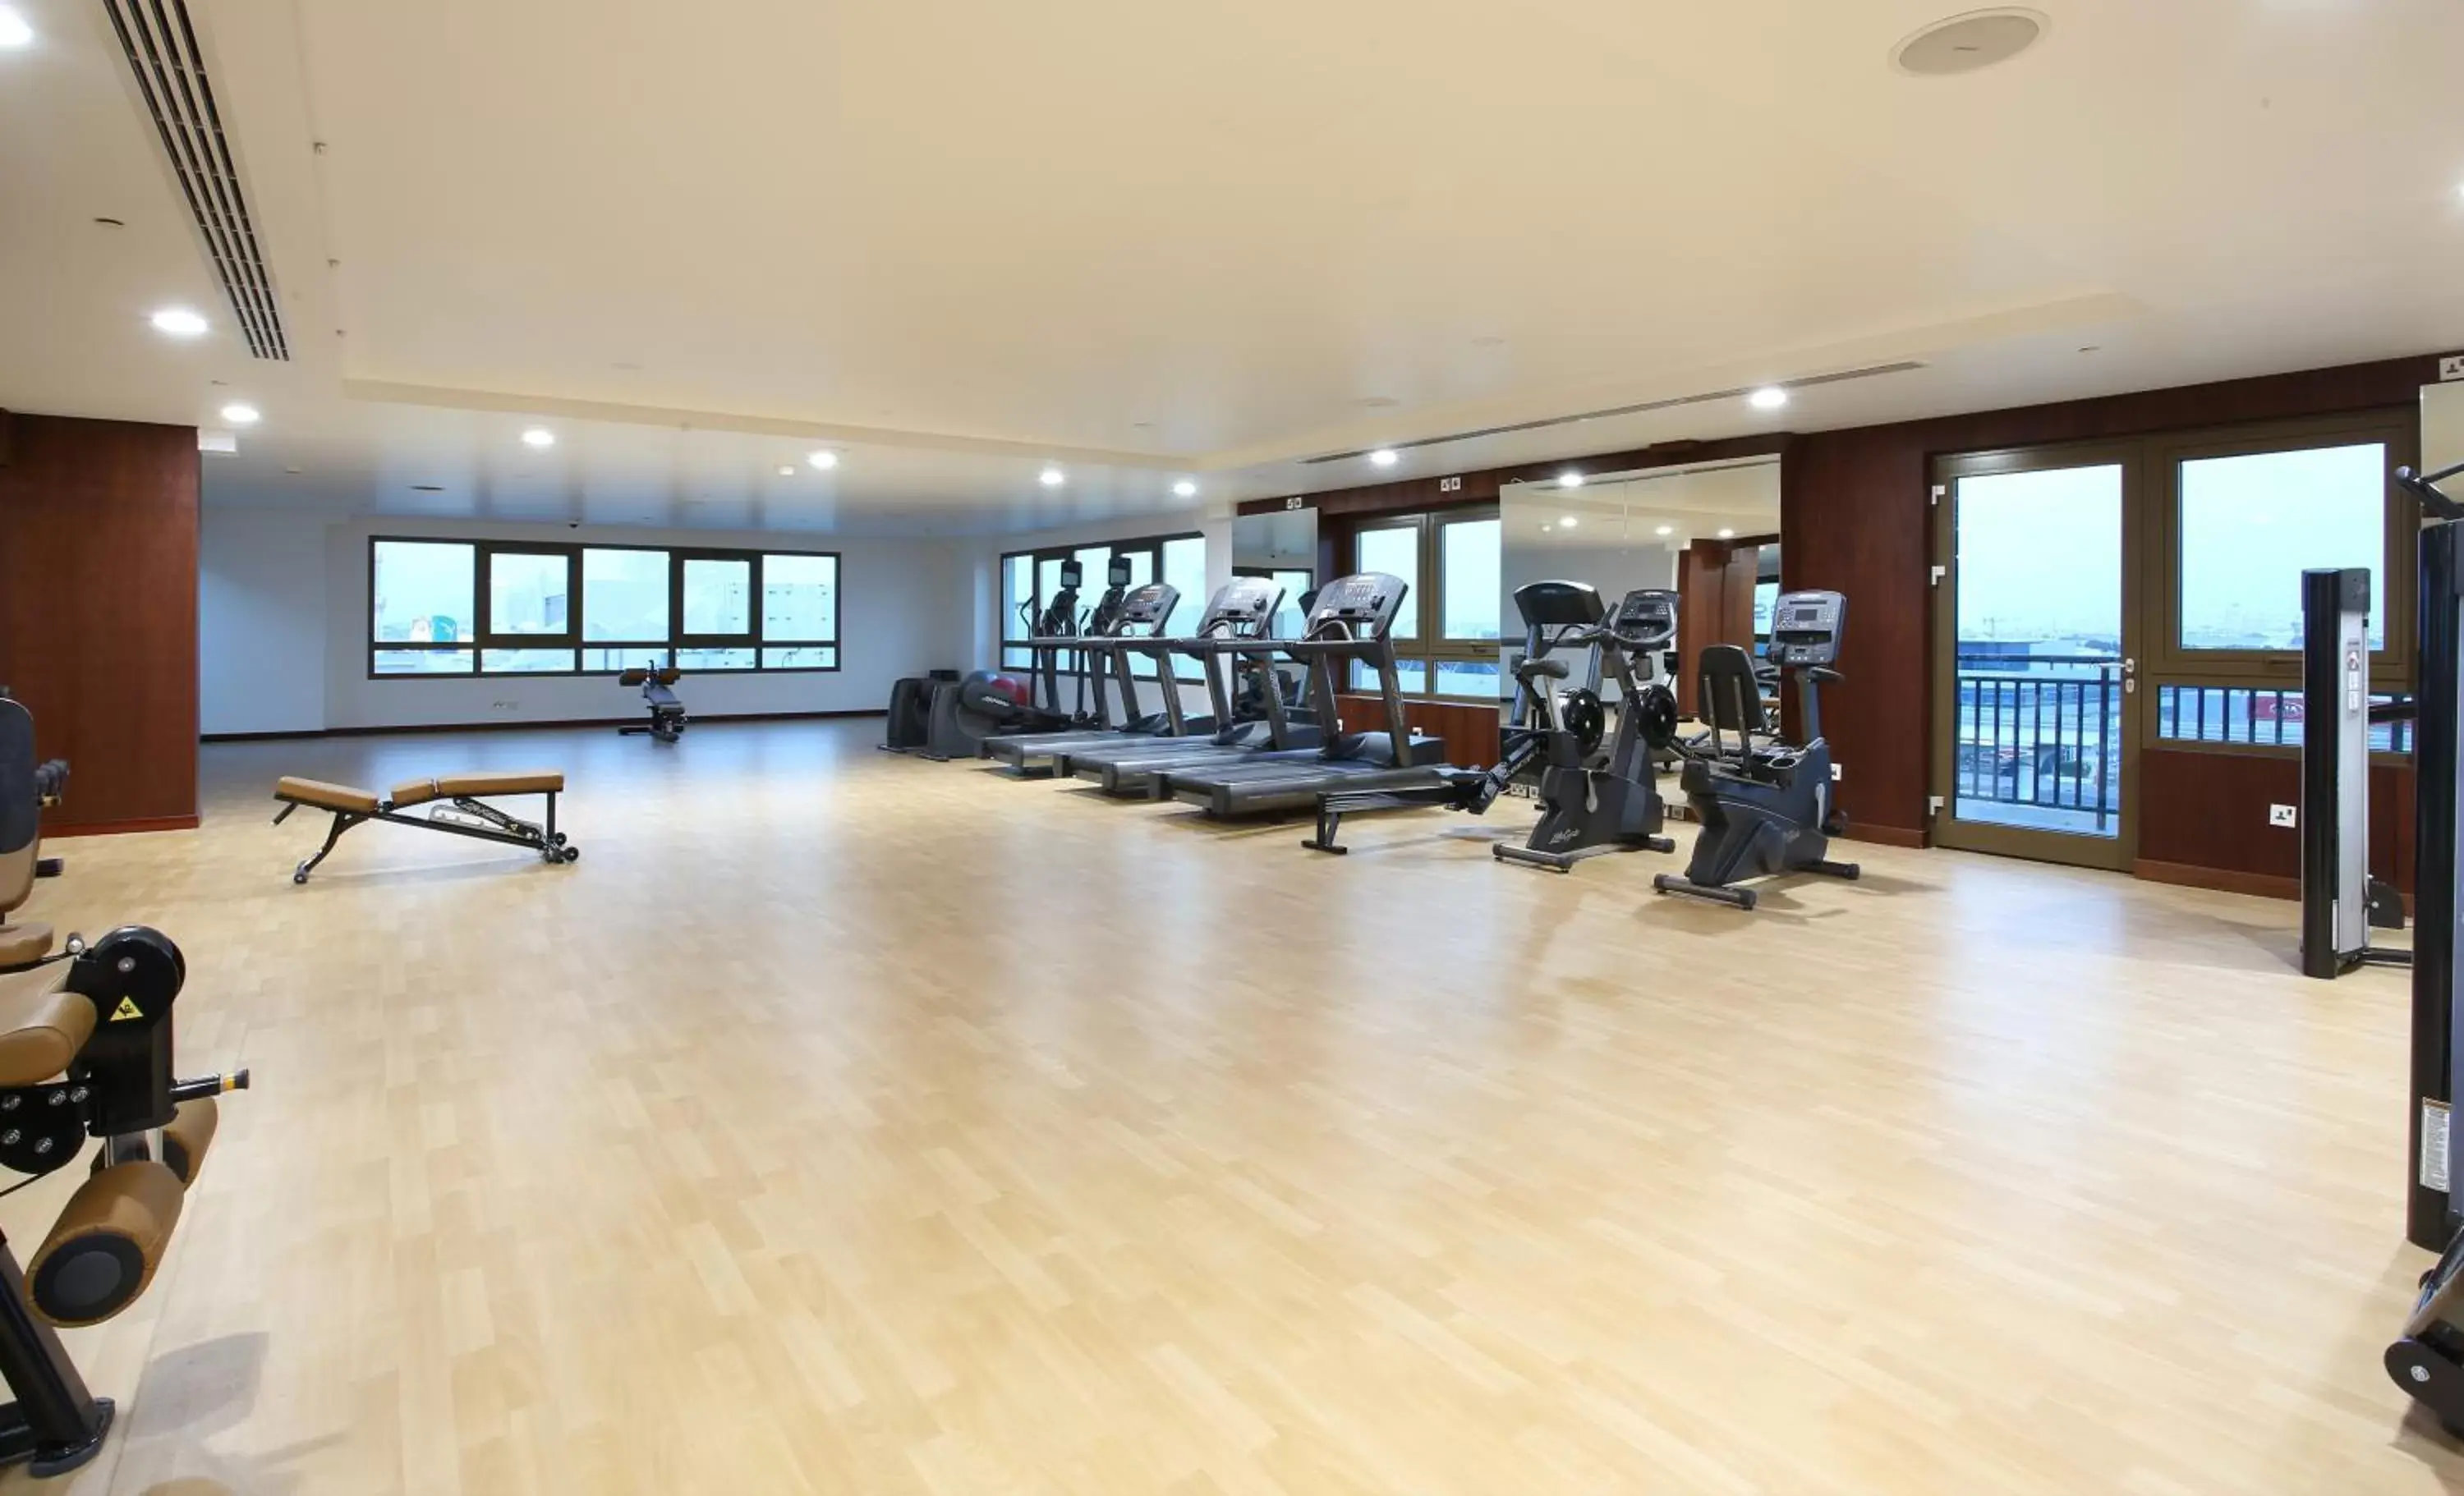 Fitness centre/facilities, Fitness Center/Facilities in Metropolitan Hotel Dubai